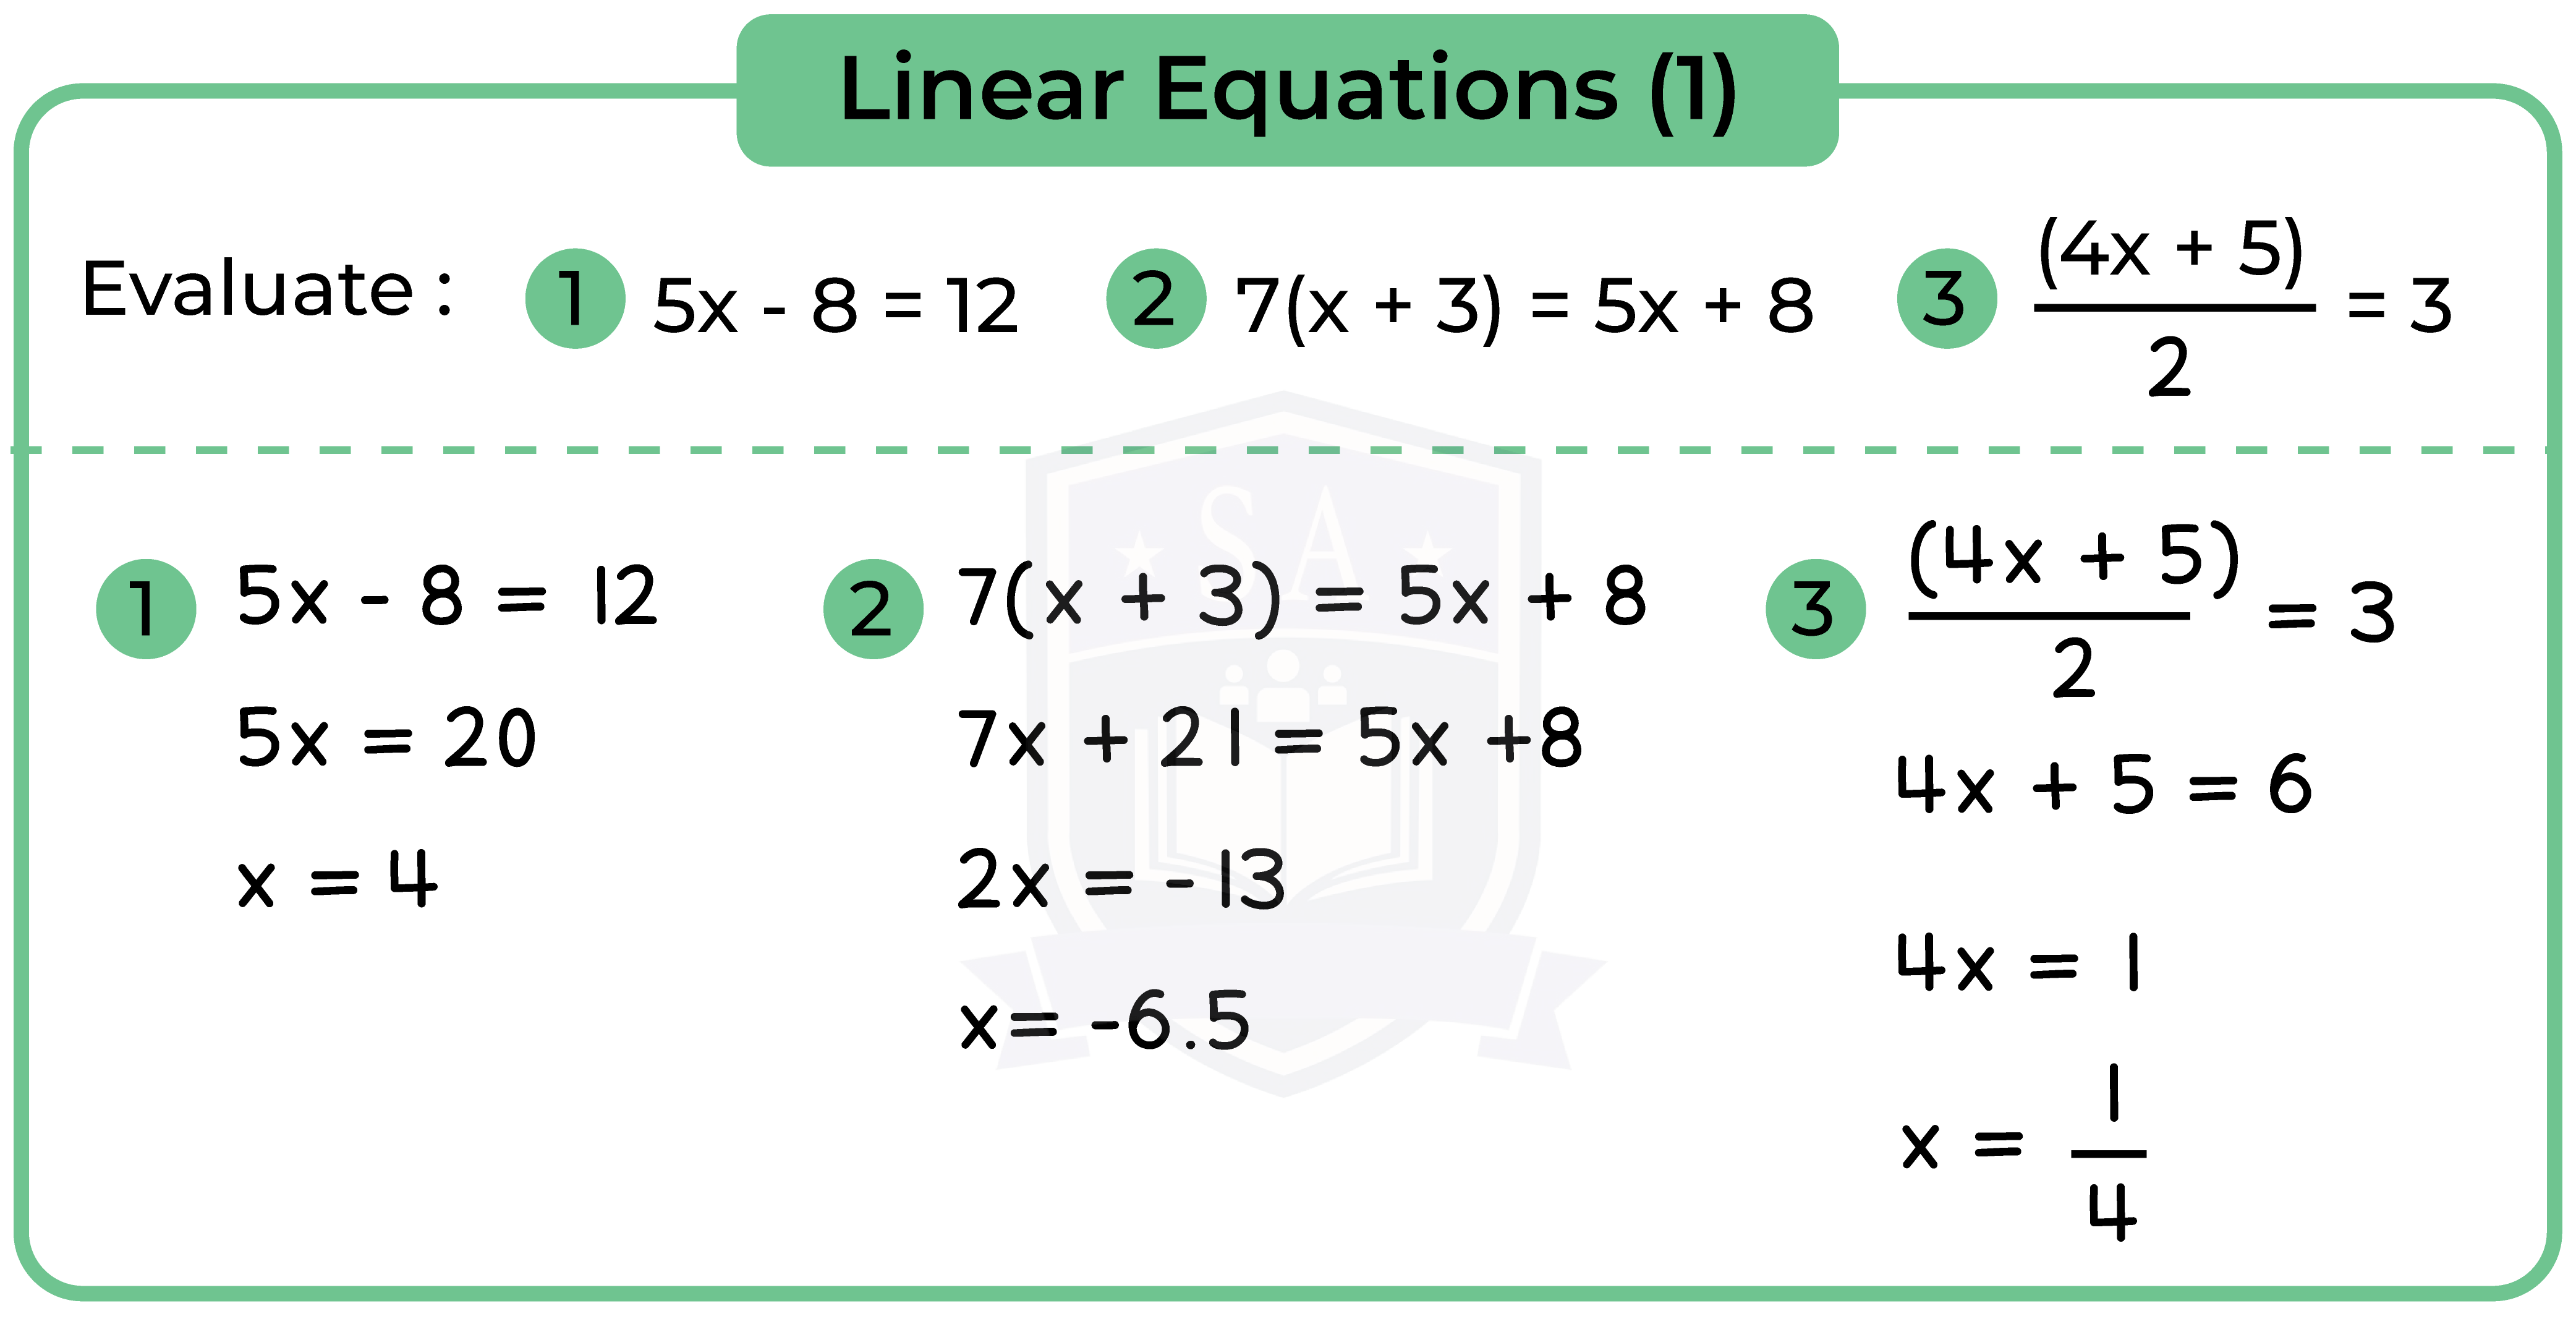 edexcel_igcse_mathematics a_topic 15_linear equations_001_Linear Equation (1)